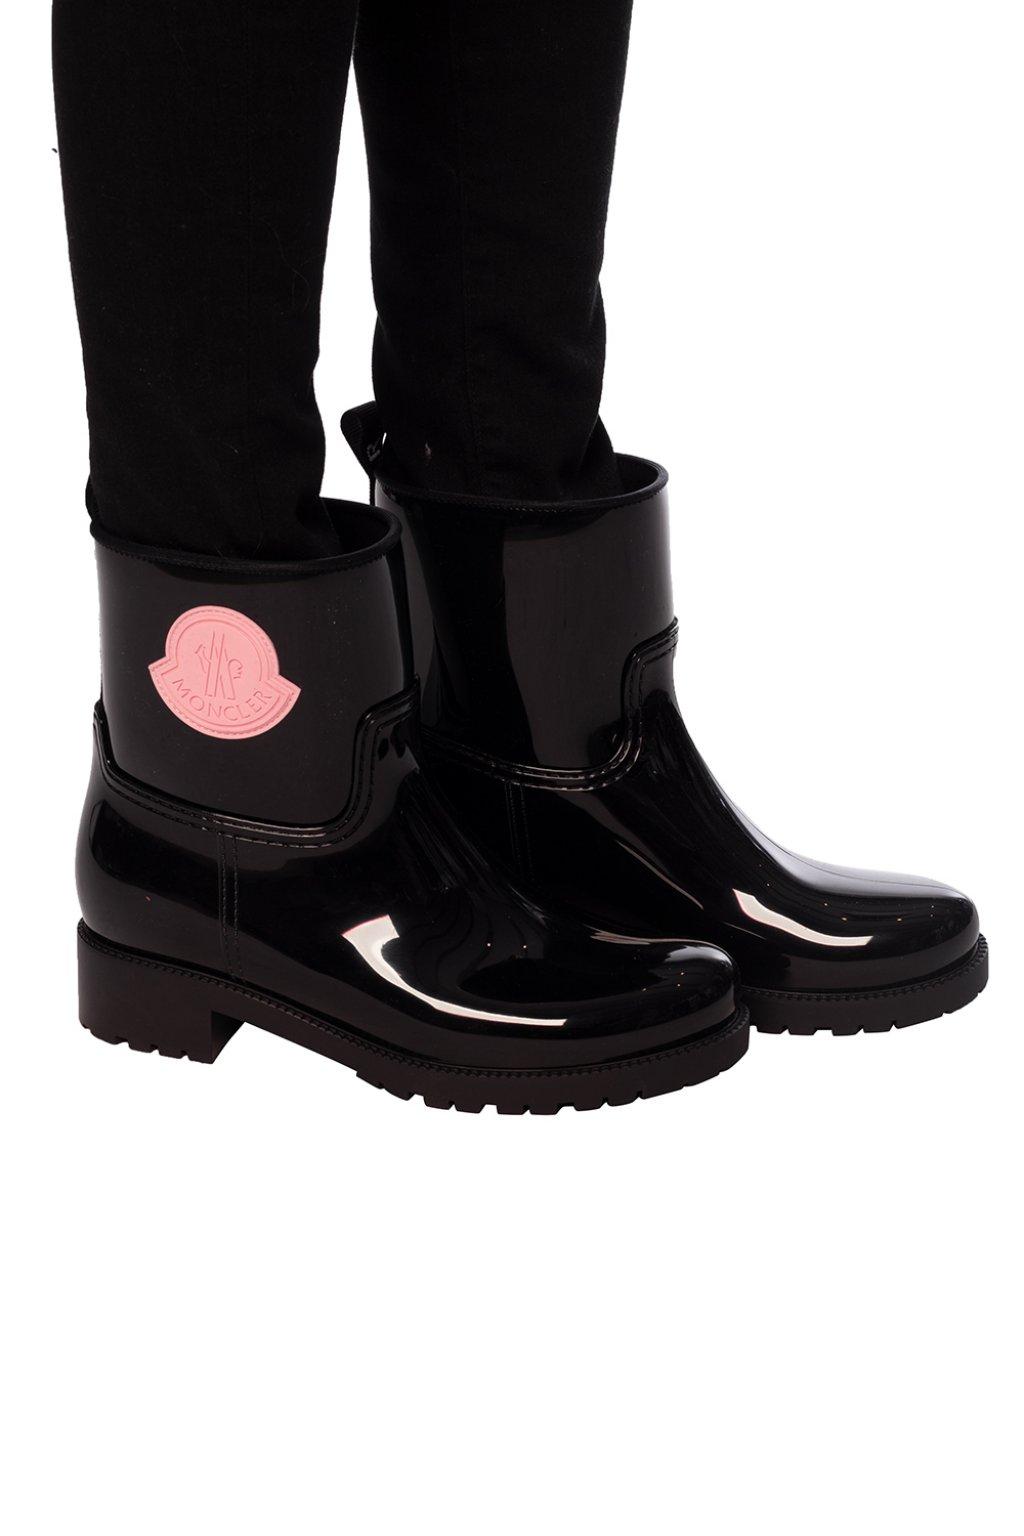 Moncler Ginette Logo Waterproof Rain Boot in Black - Lyst